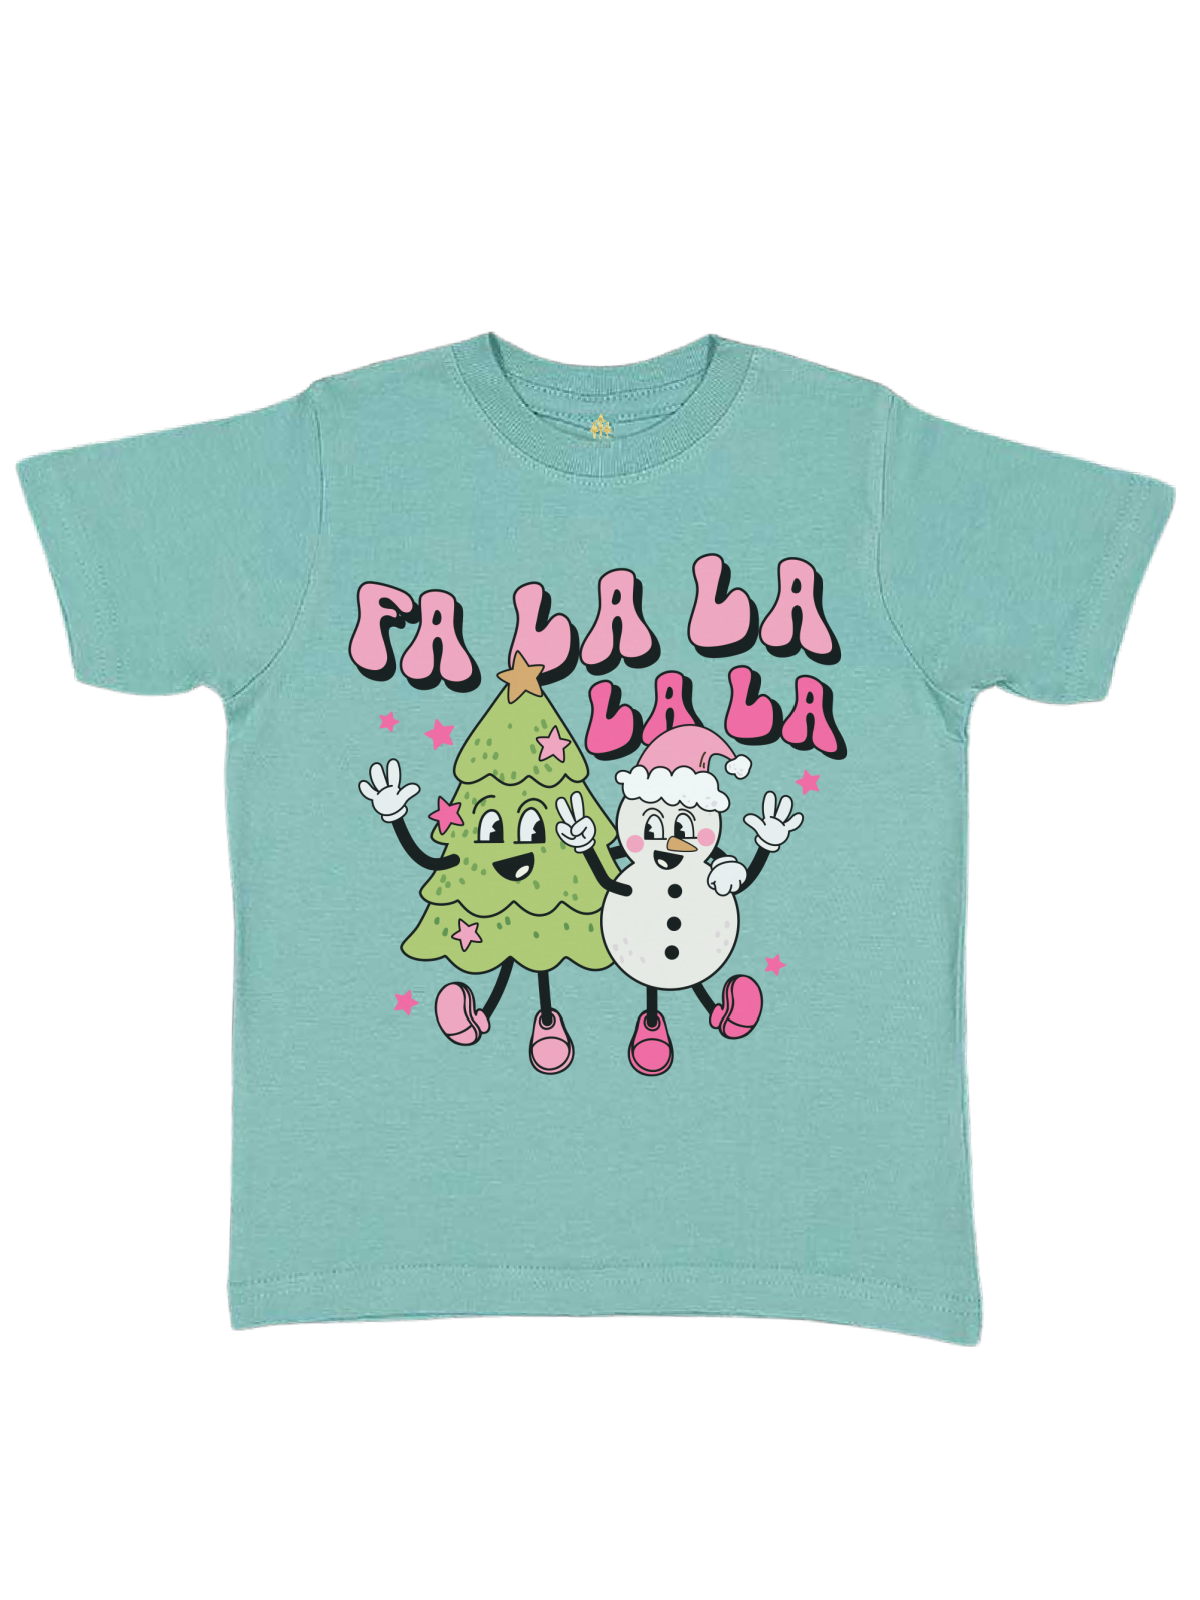 Fa La La La Kids Christmas Shirt